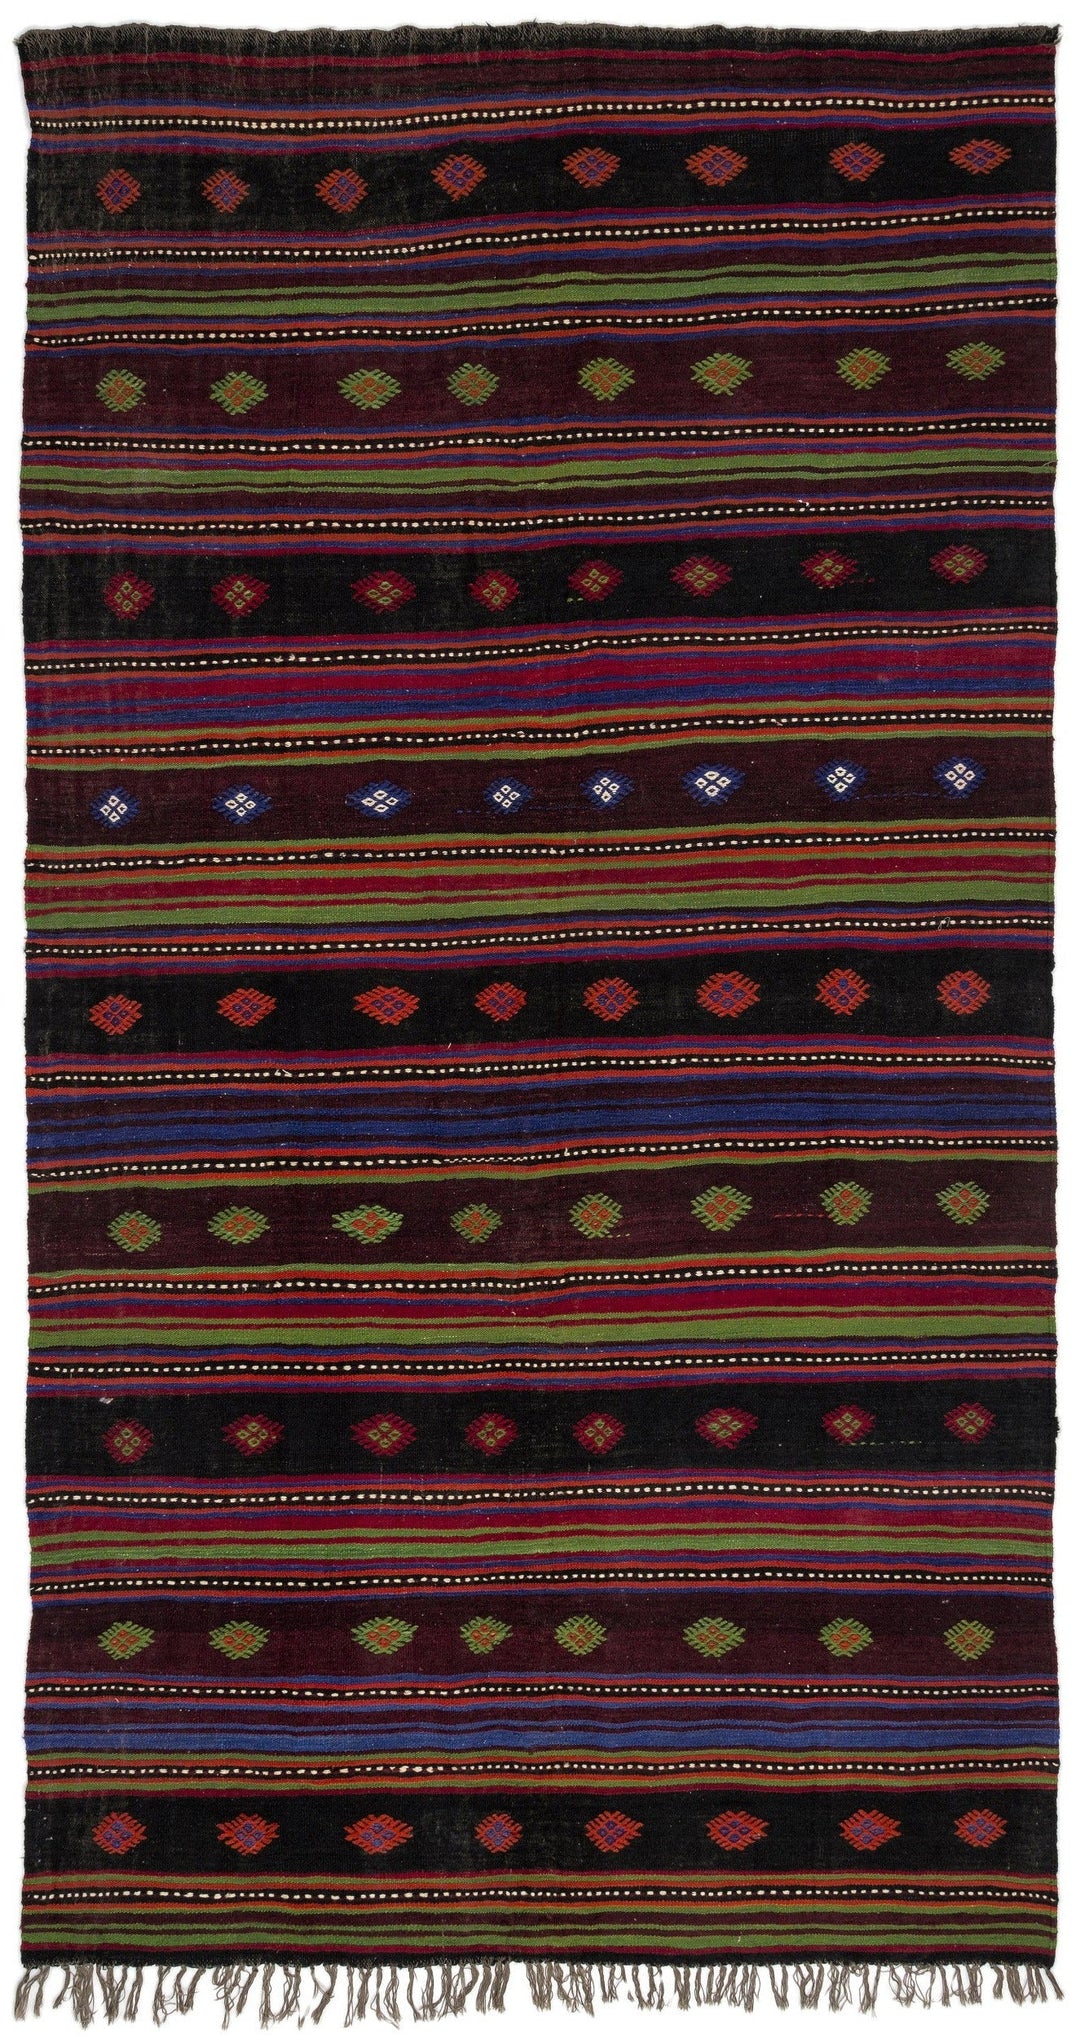 Cretan Beige Striped Wool Hand-Woven Rug 174 x 321